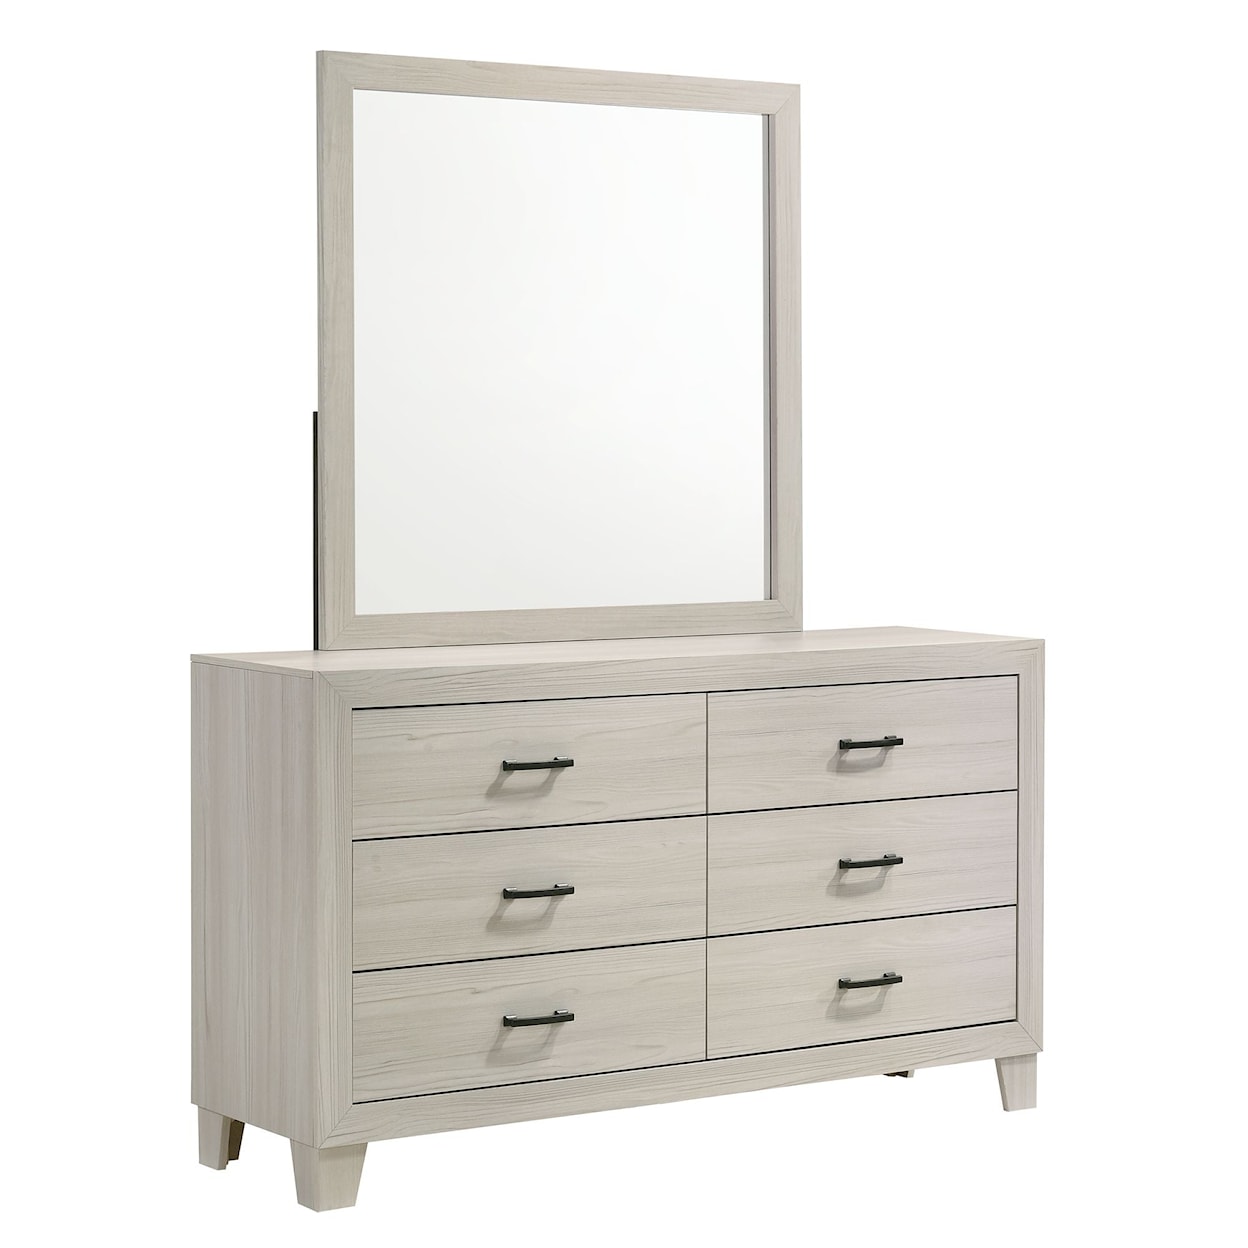 Elements International Makayla Dresser and Mirror Set